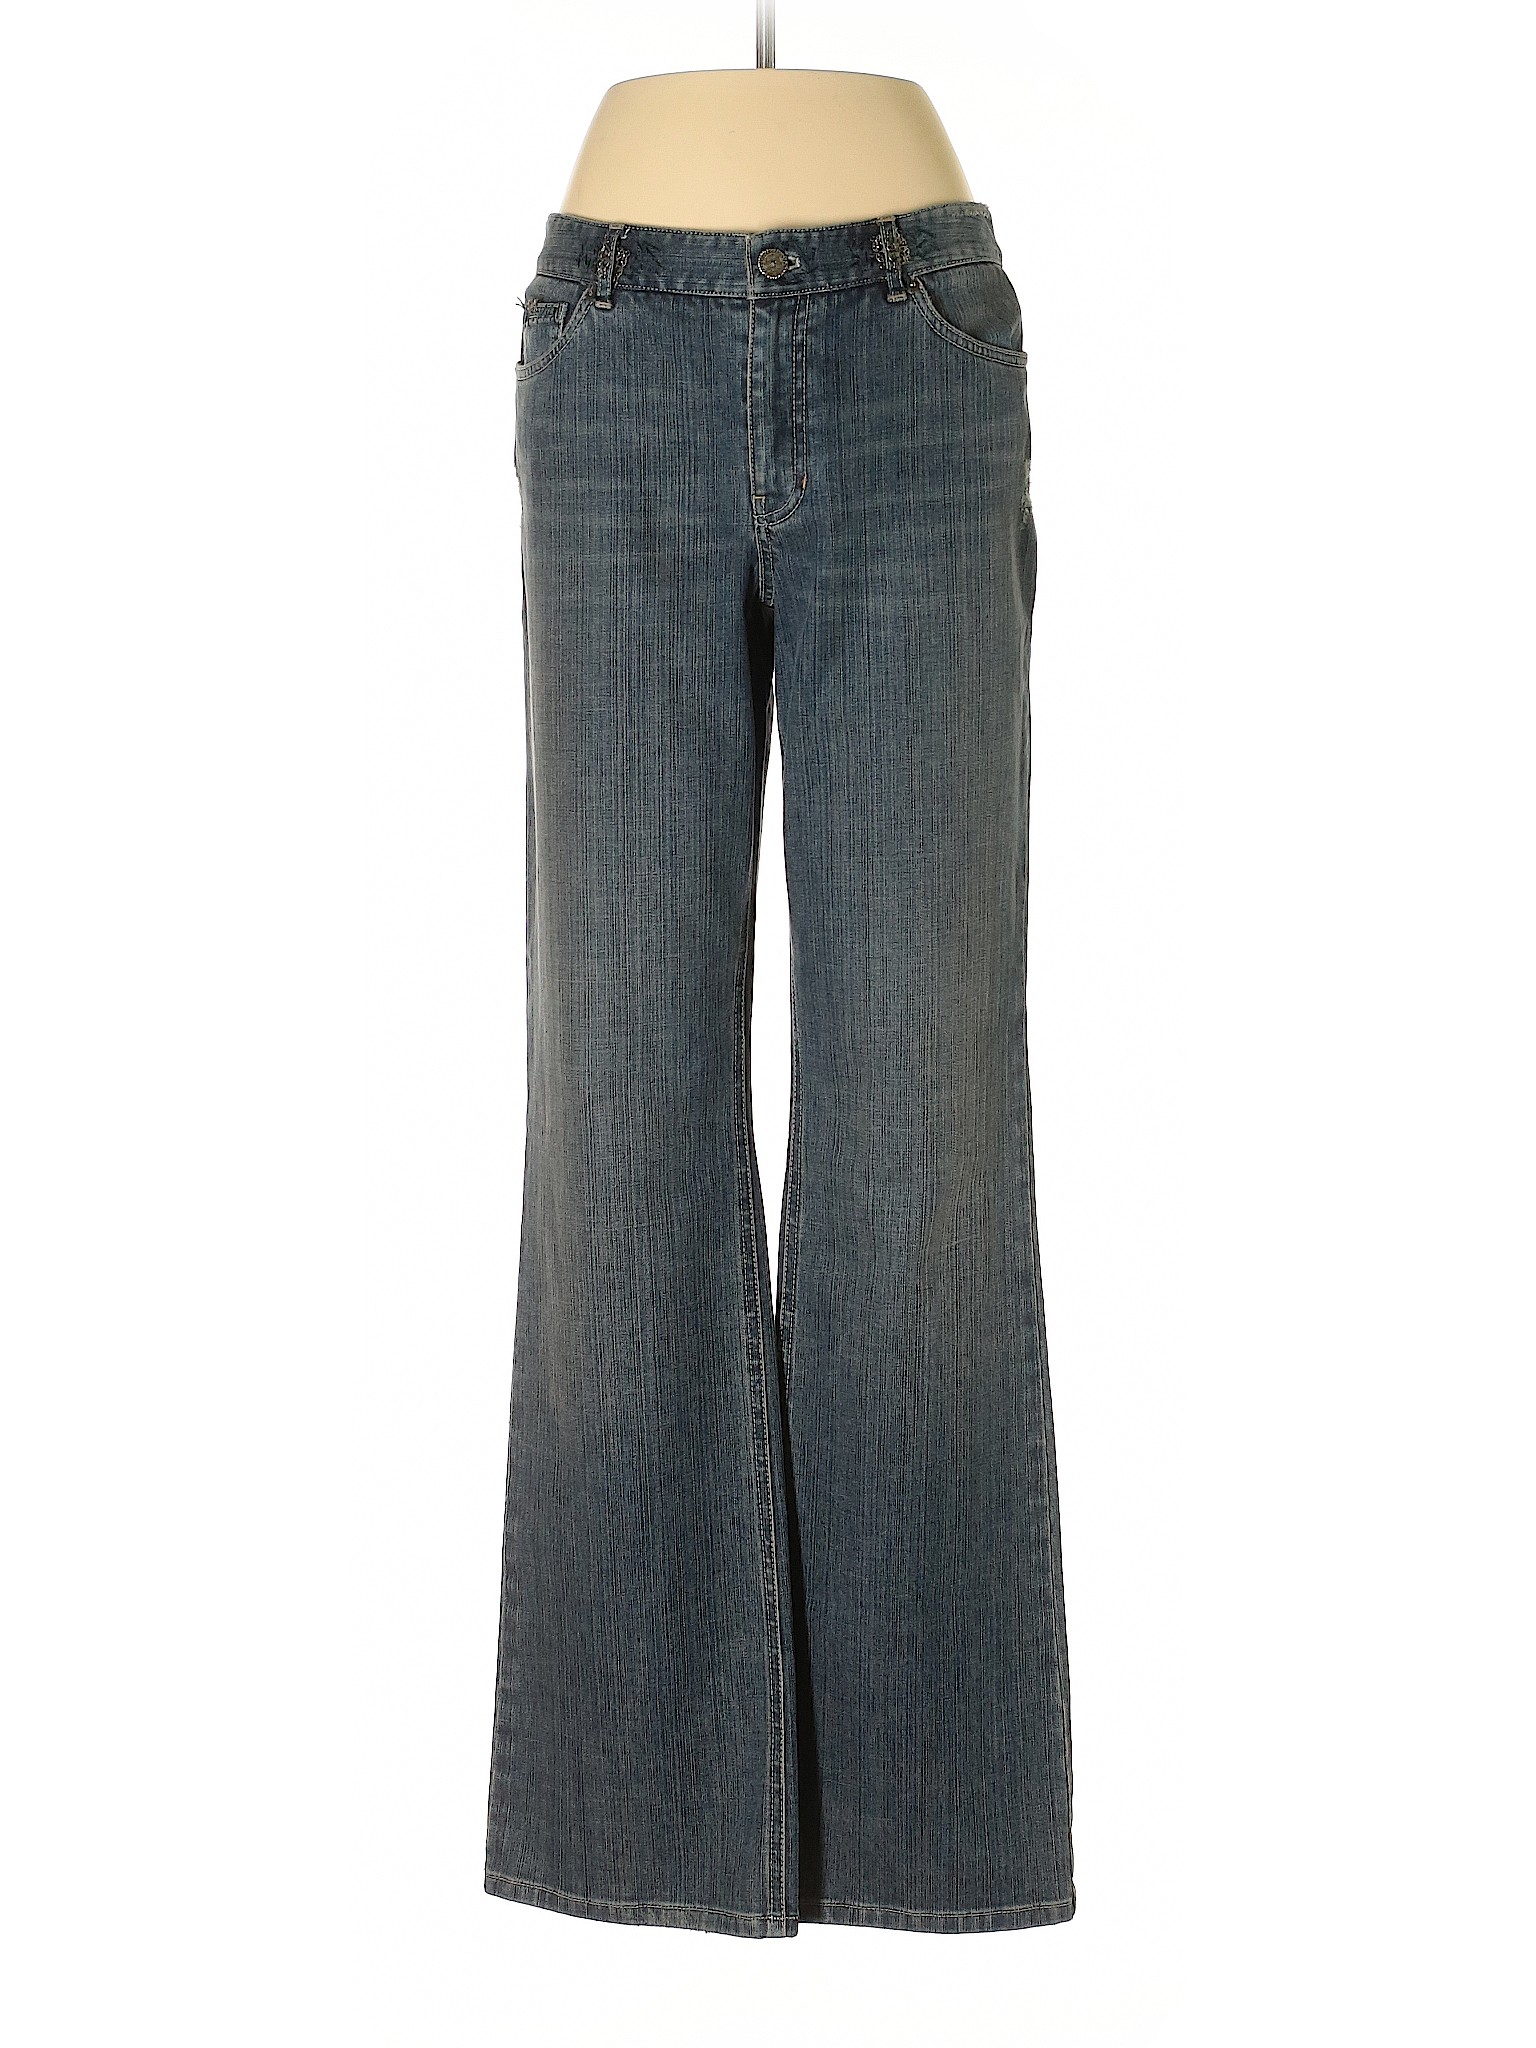 Elie Tahari Women Blue Jeans 8 | eBay